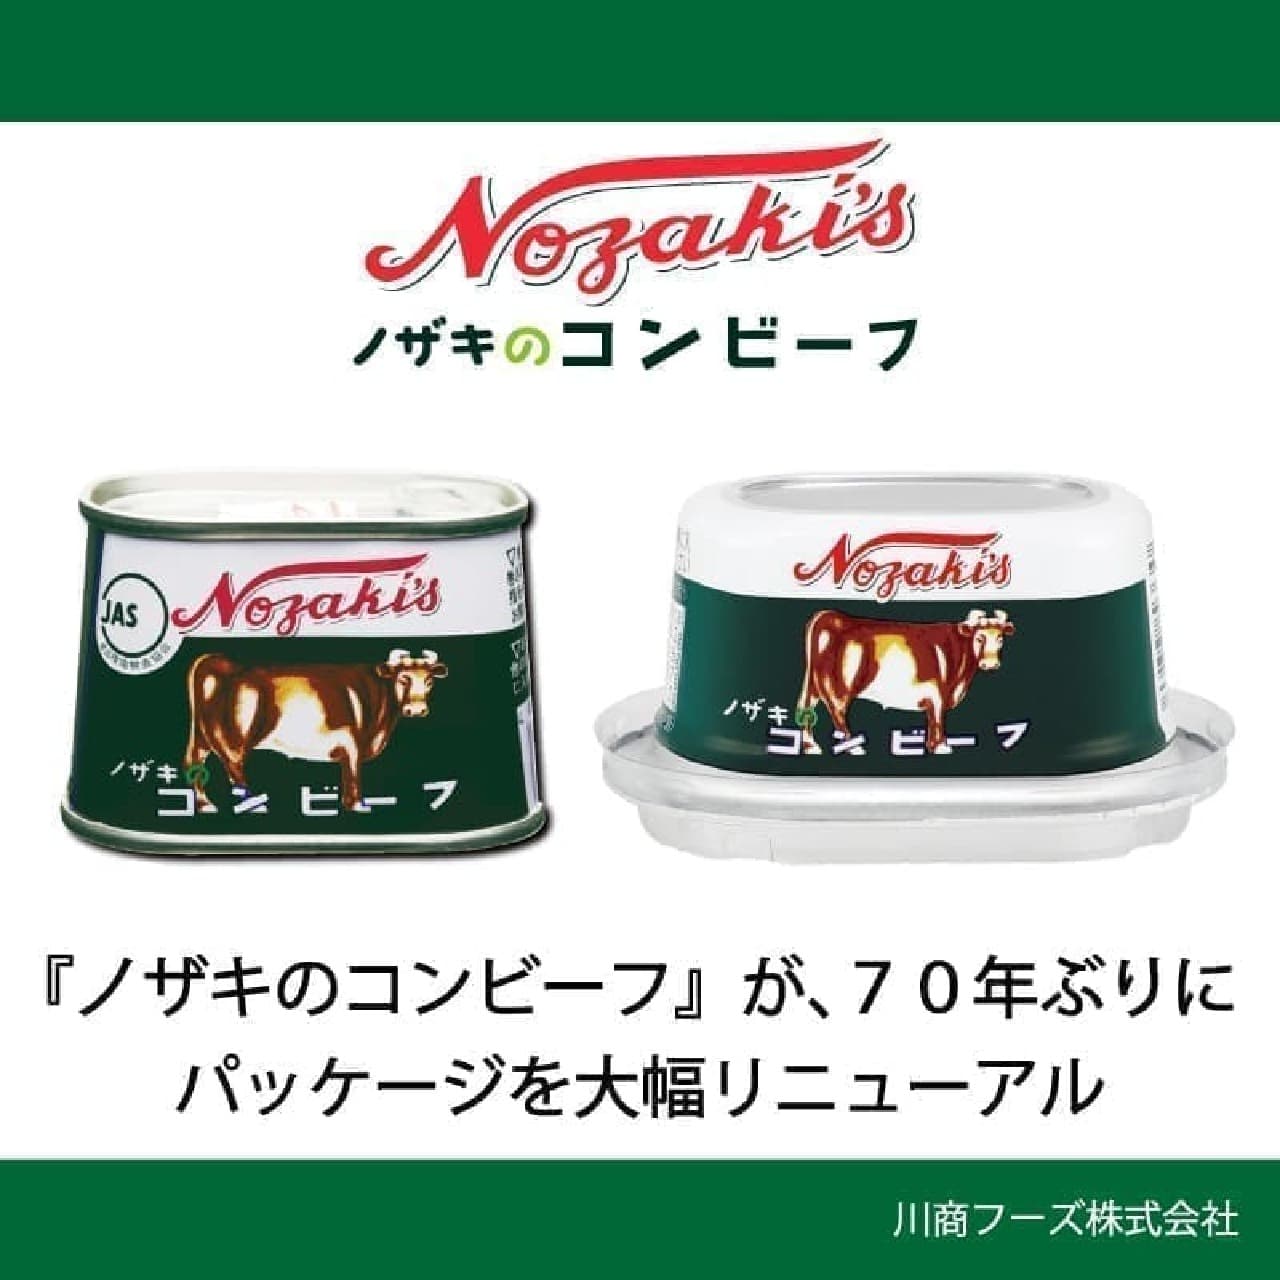 Nozaki's corned beef renewal